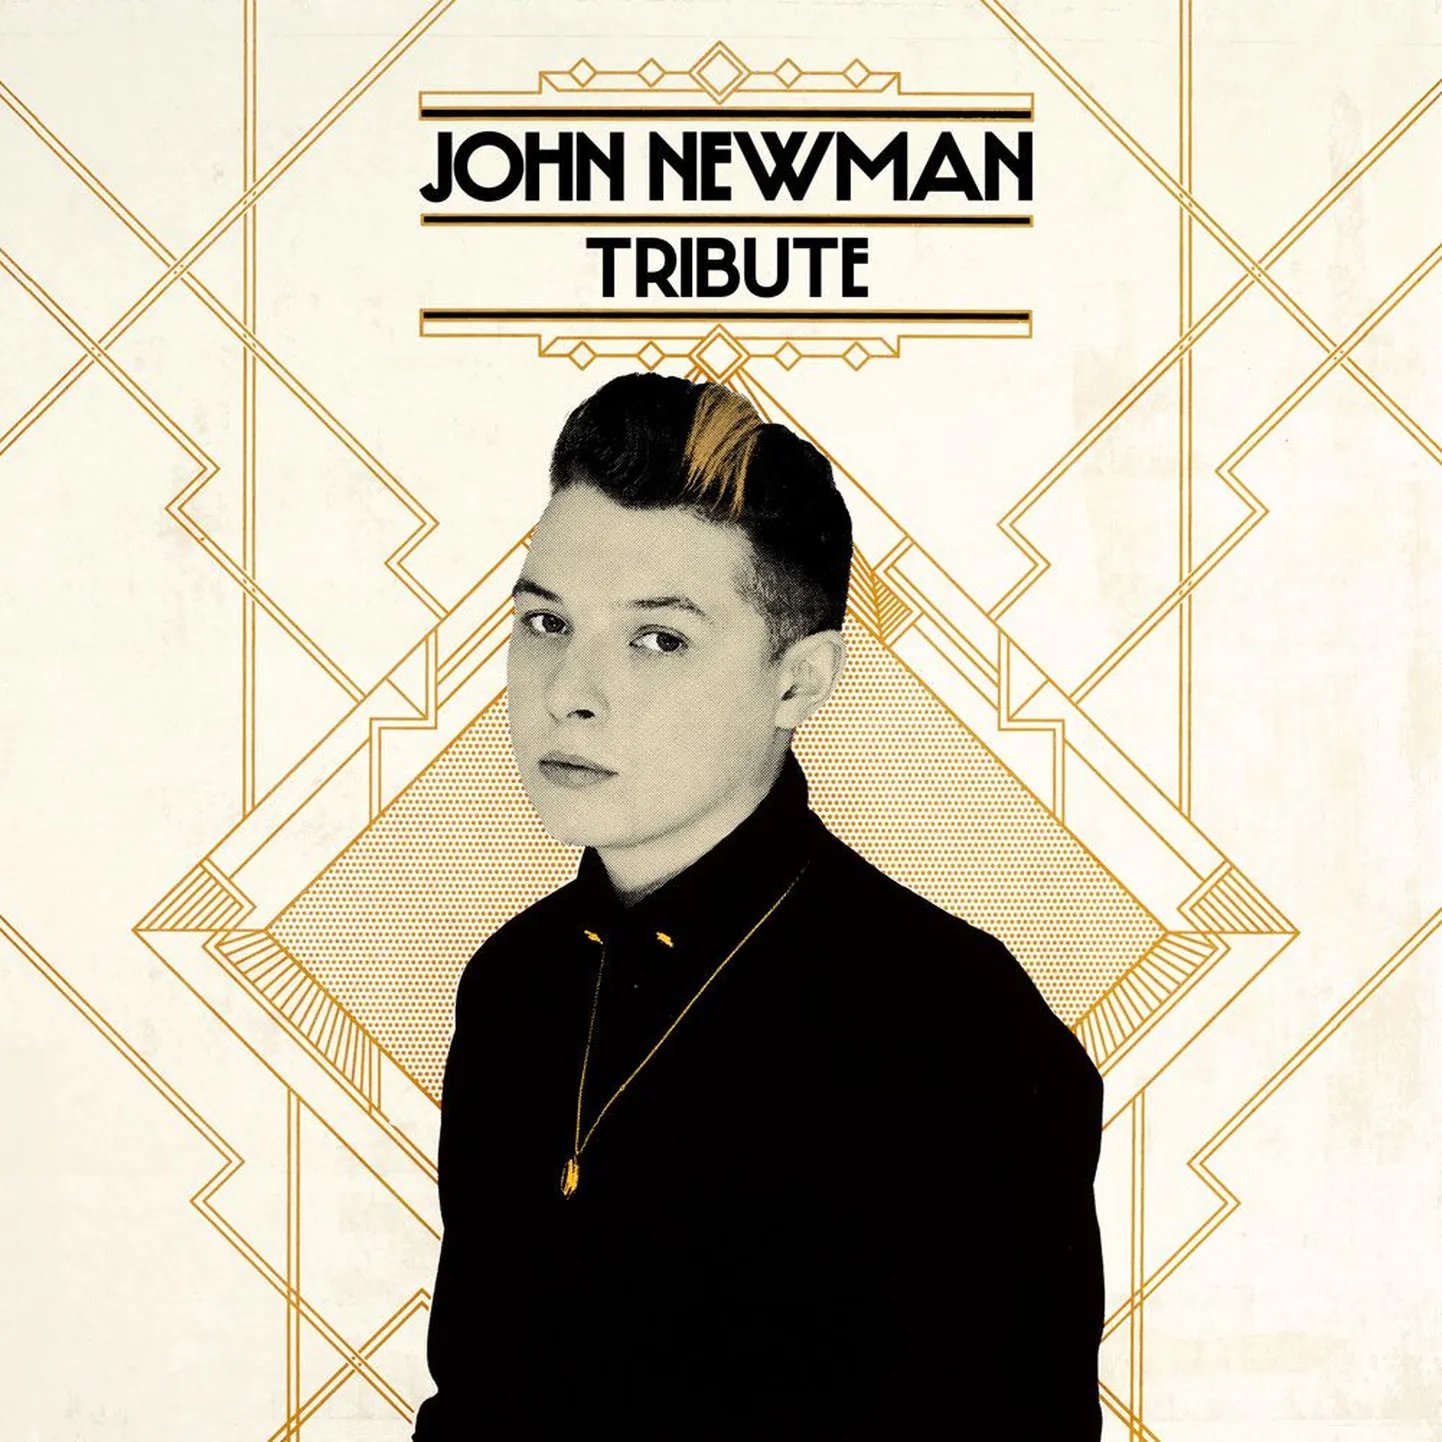 John Newman
Tribute 
(Universal)